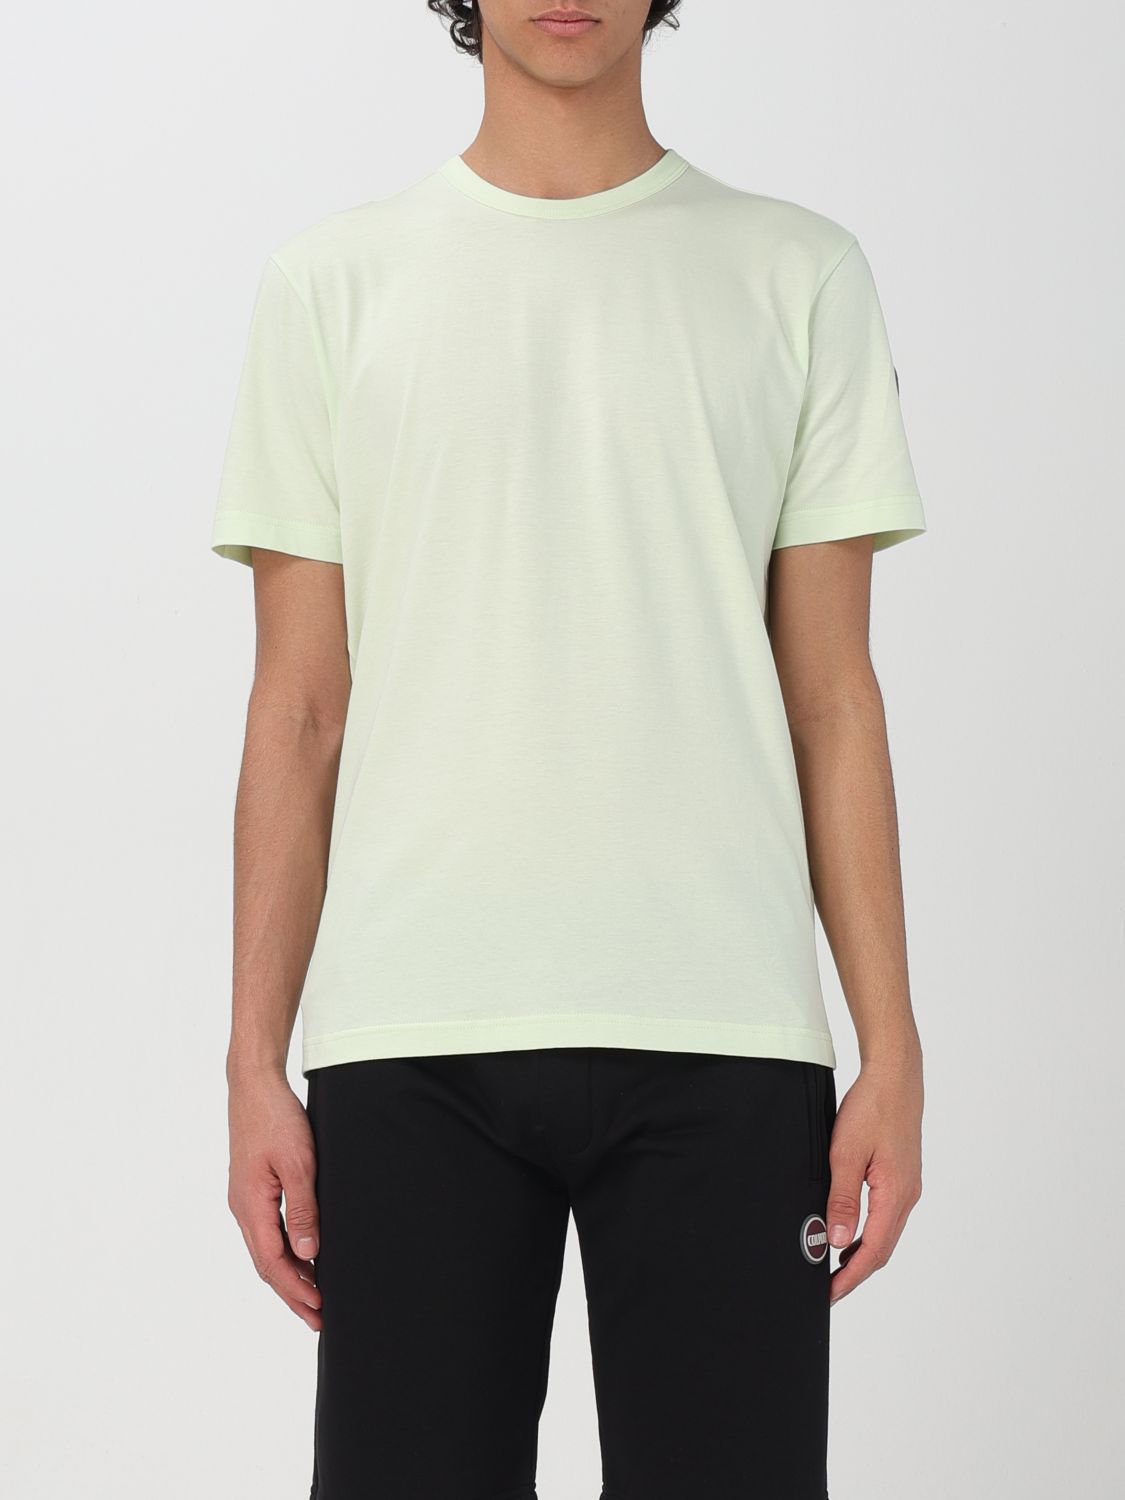 Colmar T-Shirt COLMAR Men colour Green